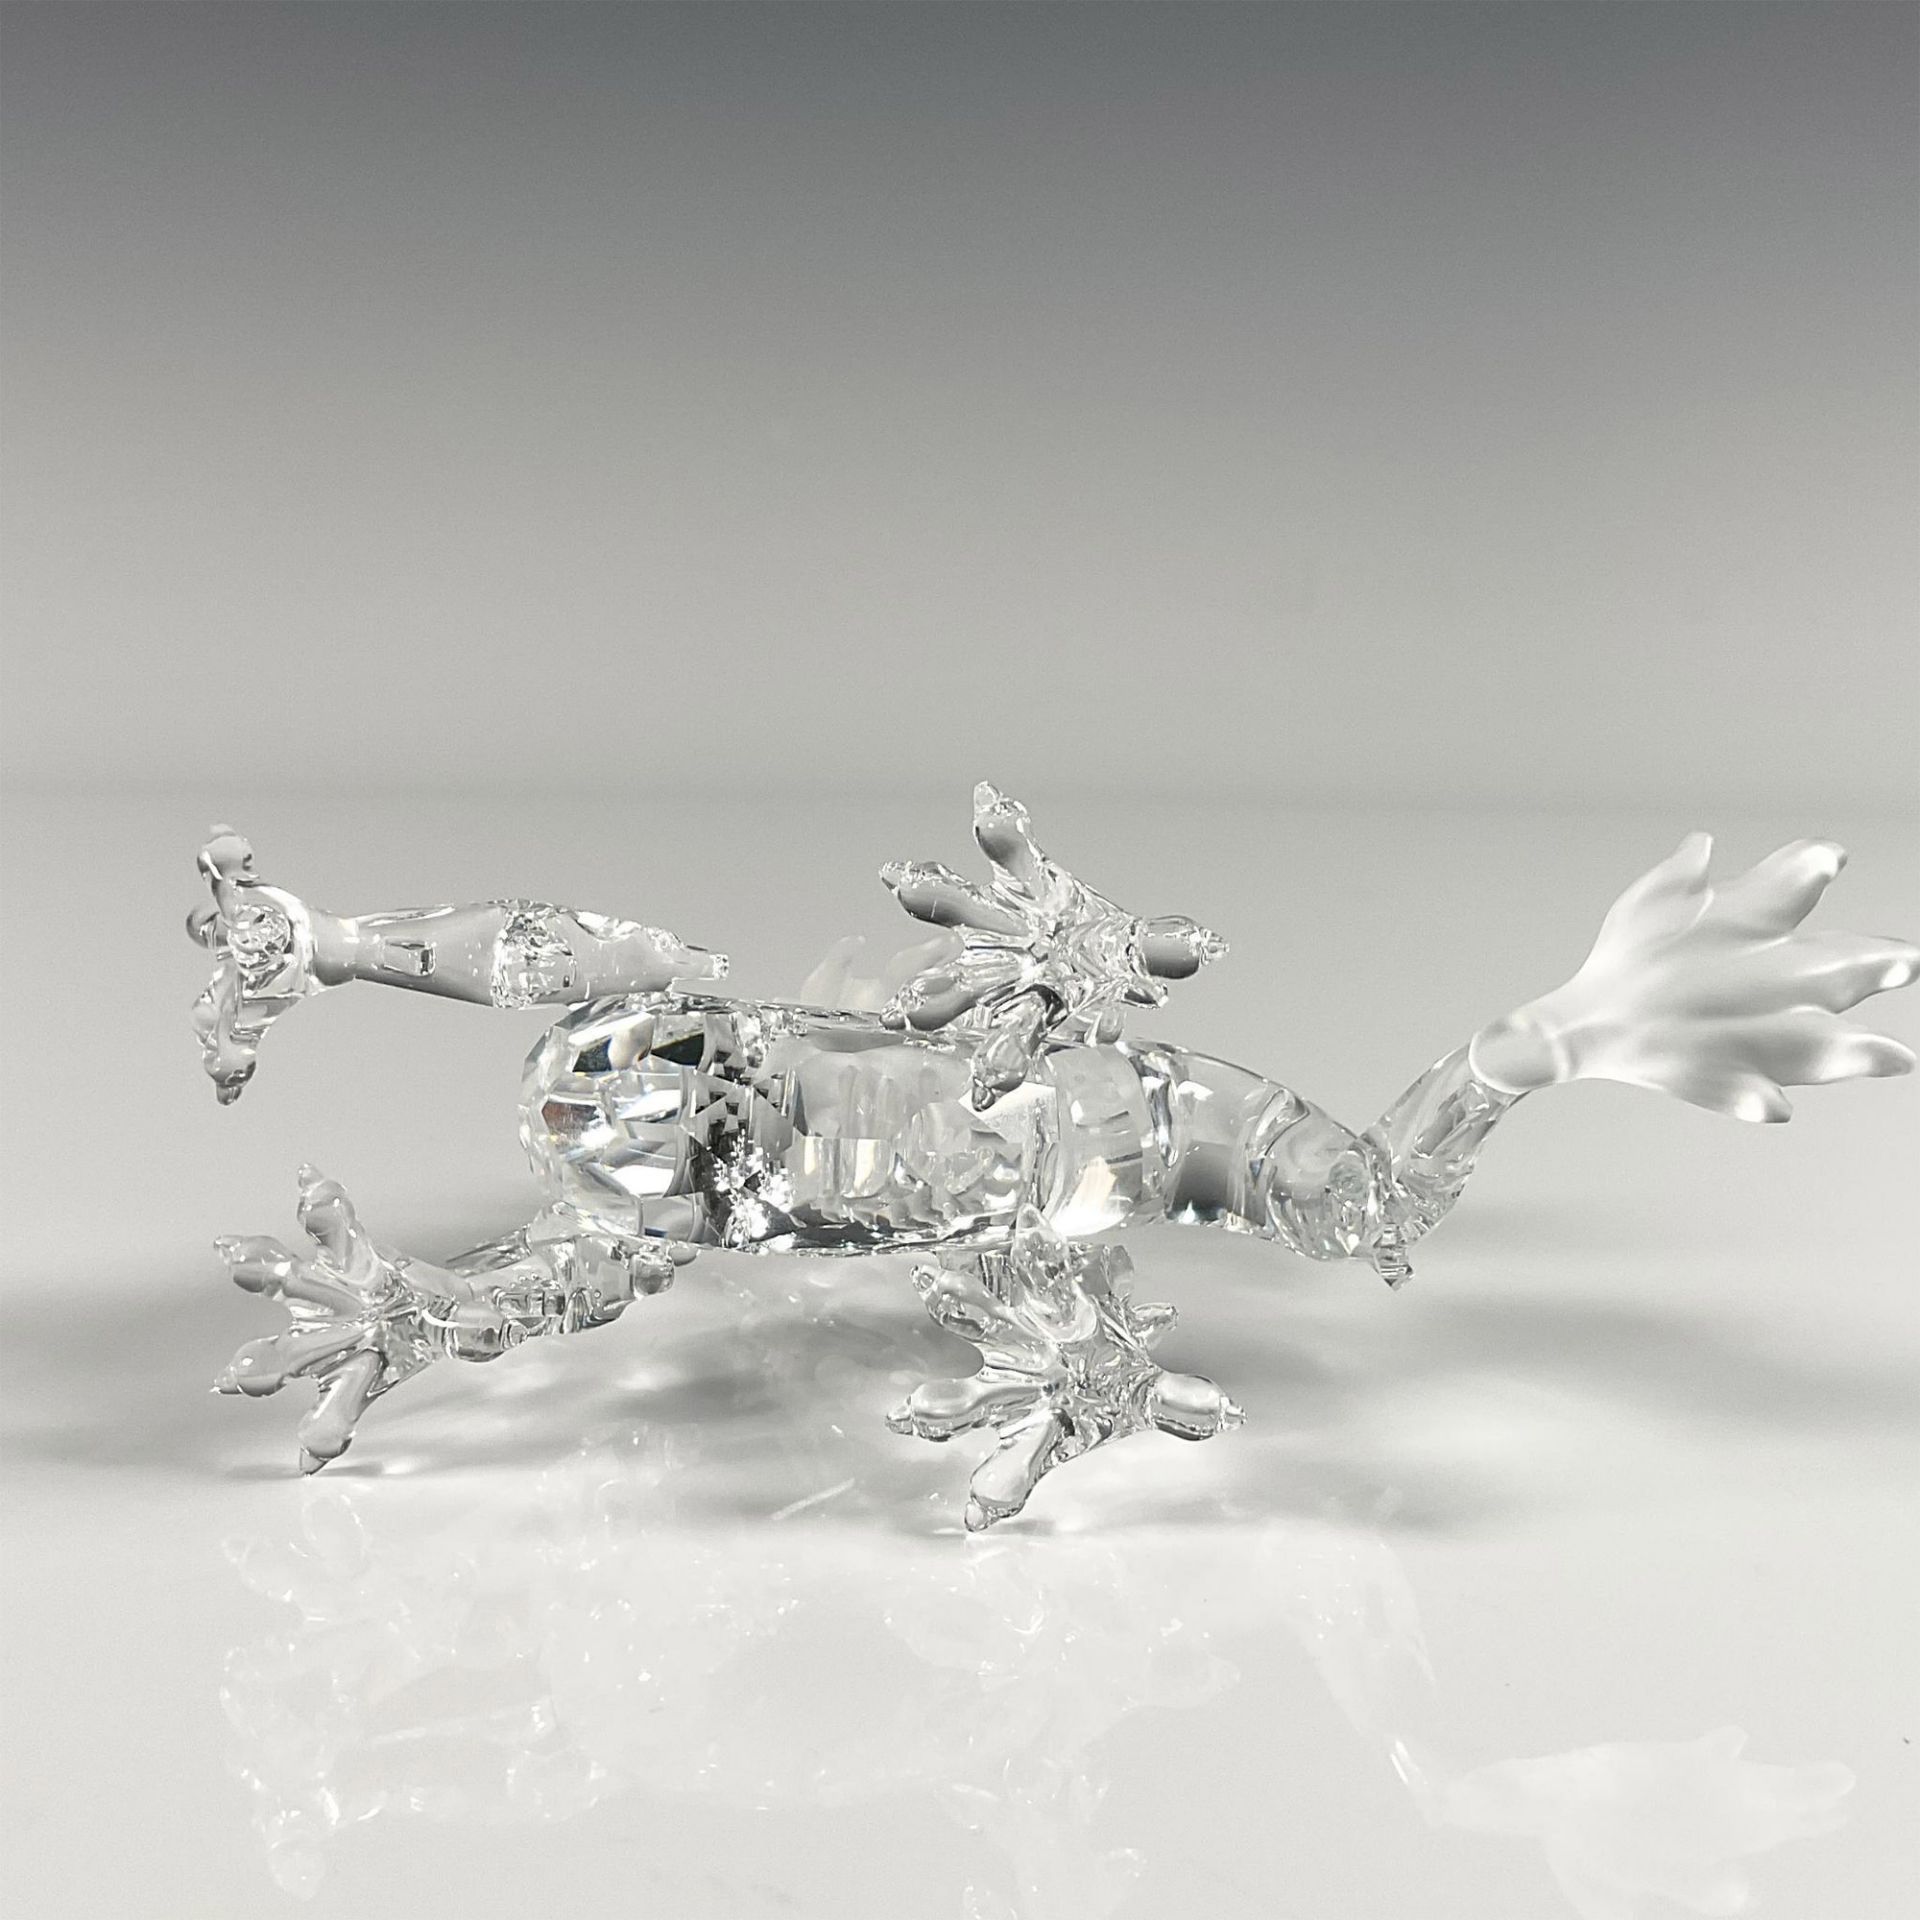 2pc Swarovski Crystal Figurine, Dragon with Stand - Image 4 of 4